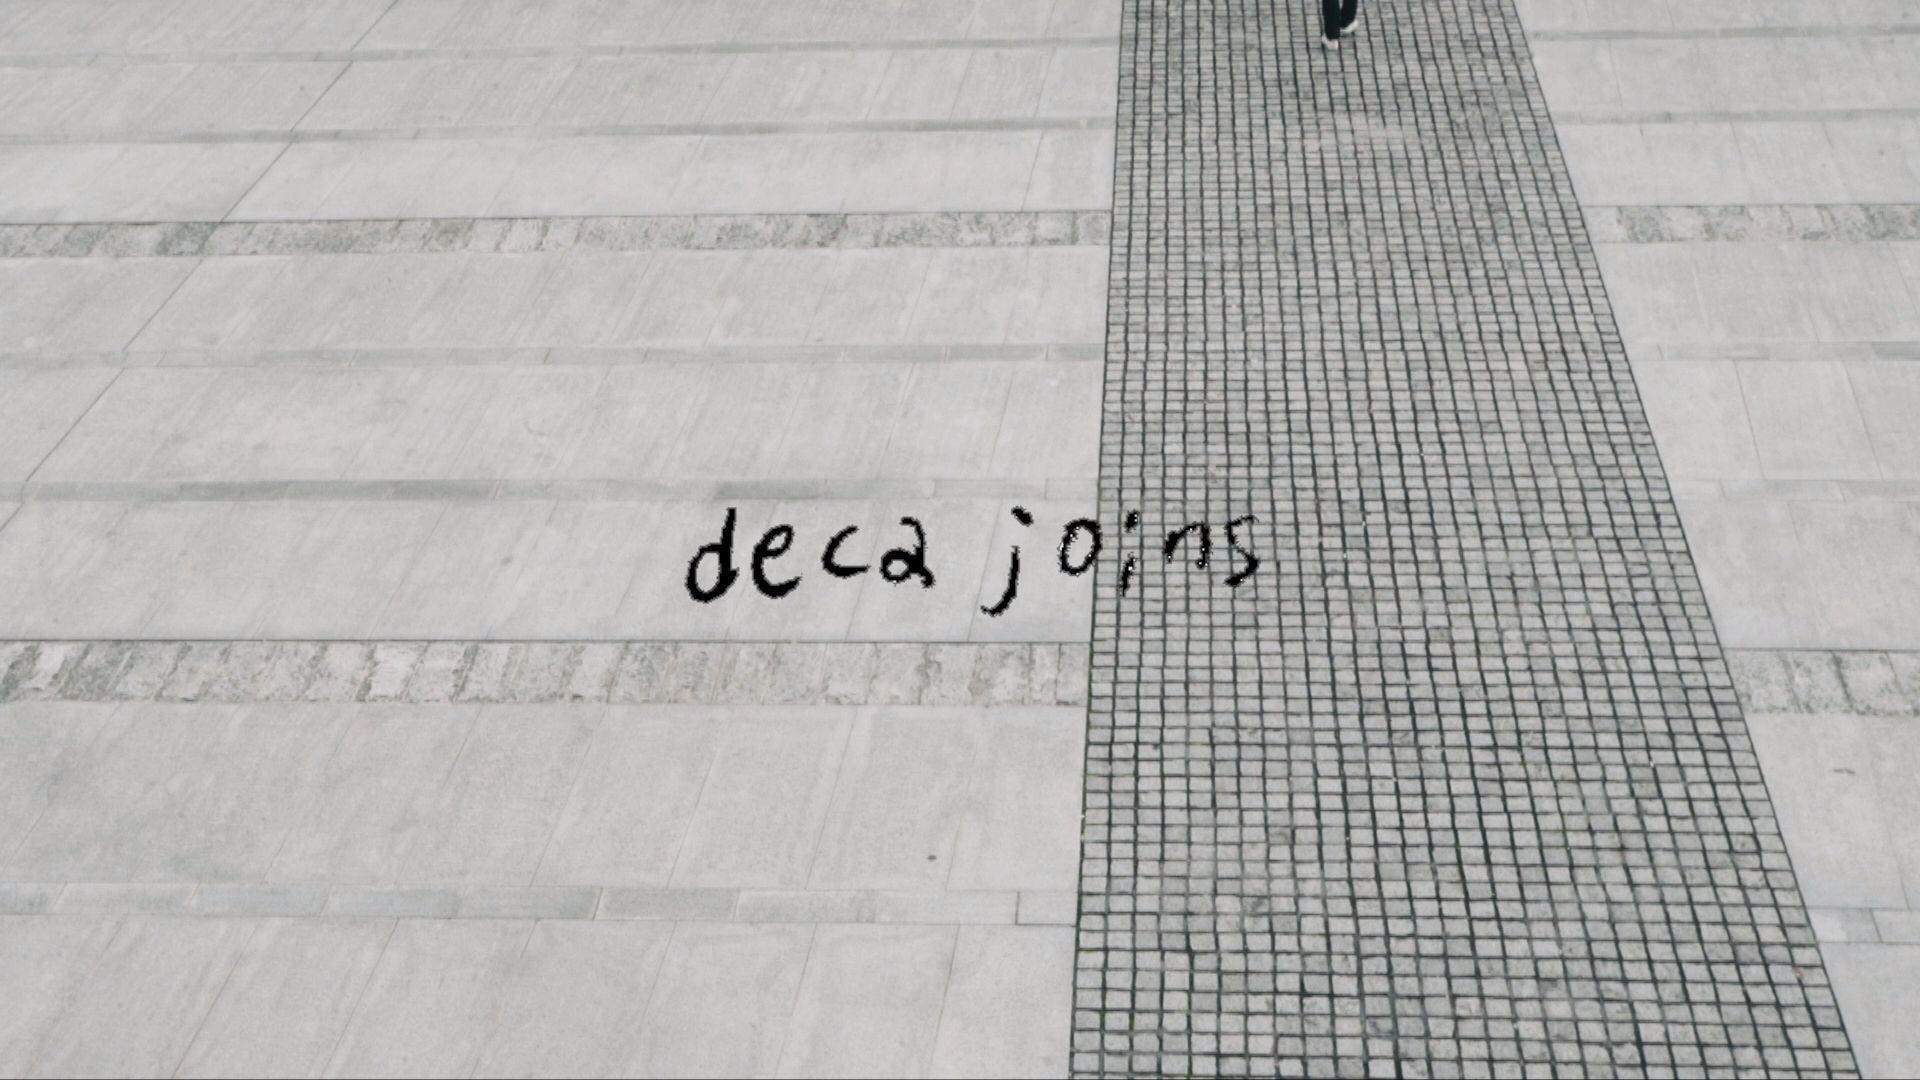 deca joins - deca joins 夜間獨白